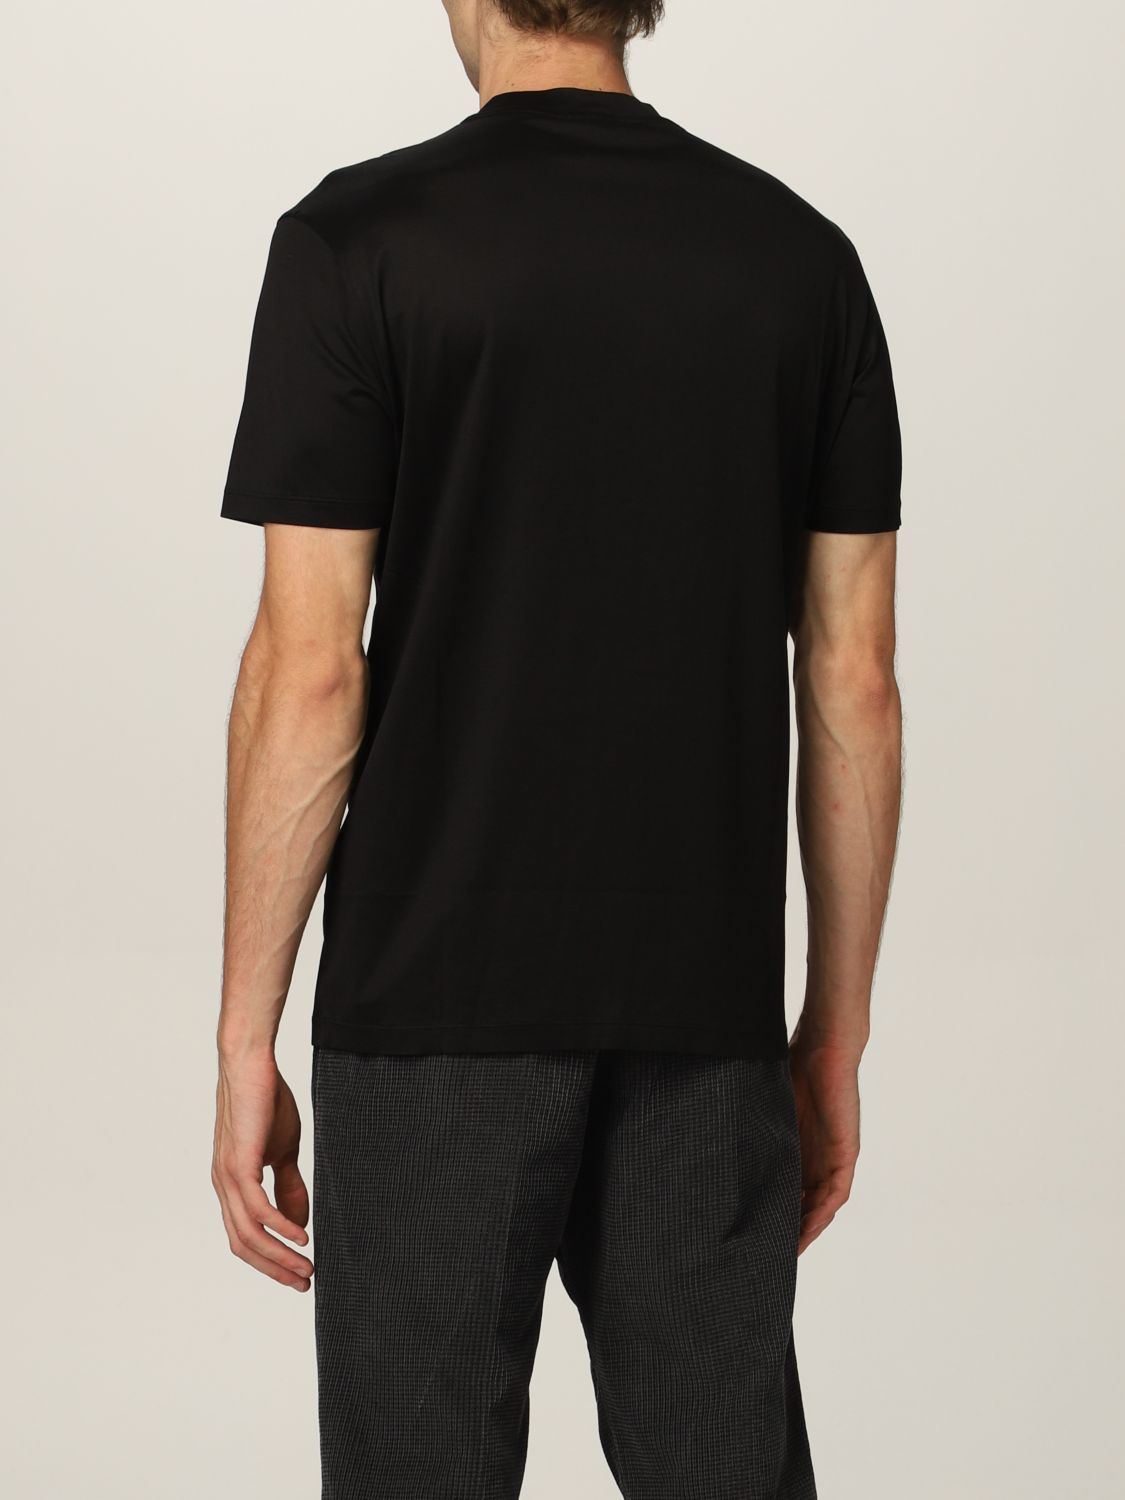 T-shirt Emporio Armani: T-shirt homme Emporio Armani noir 2